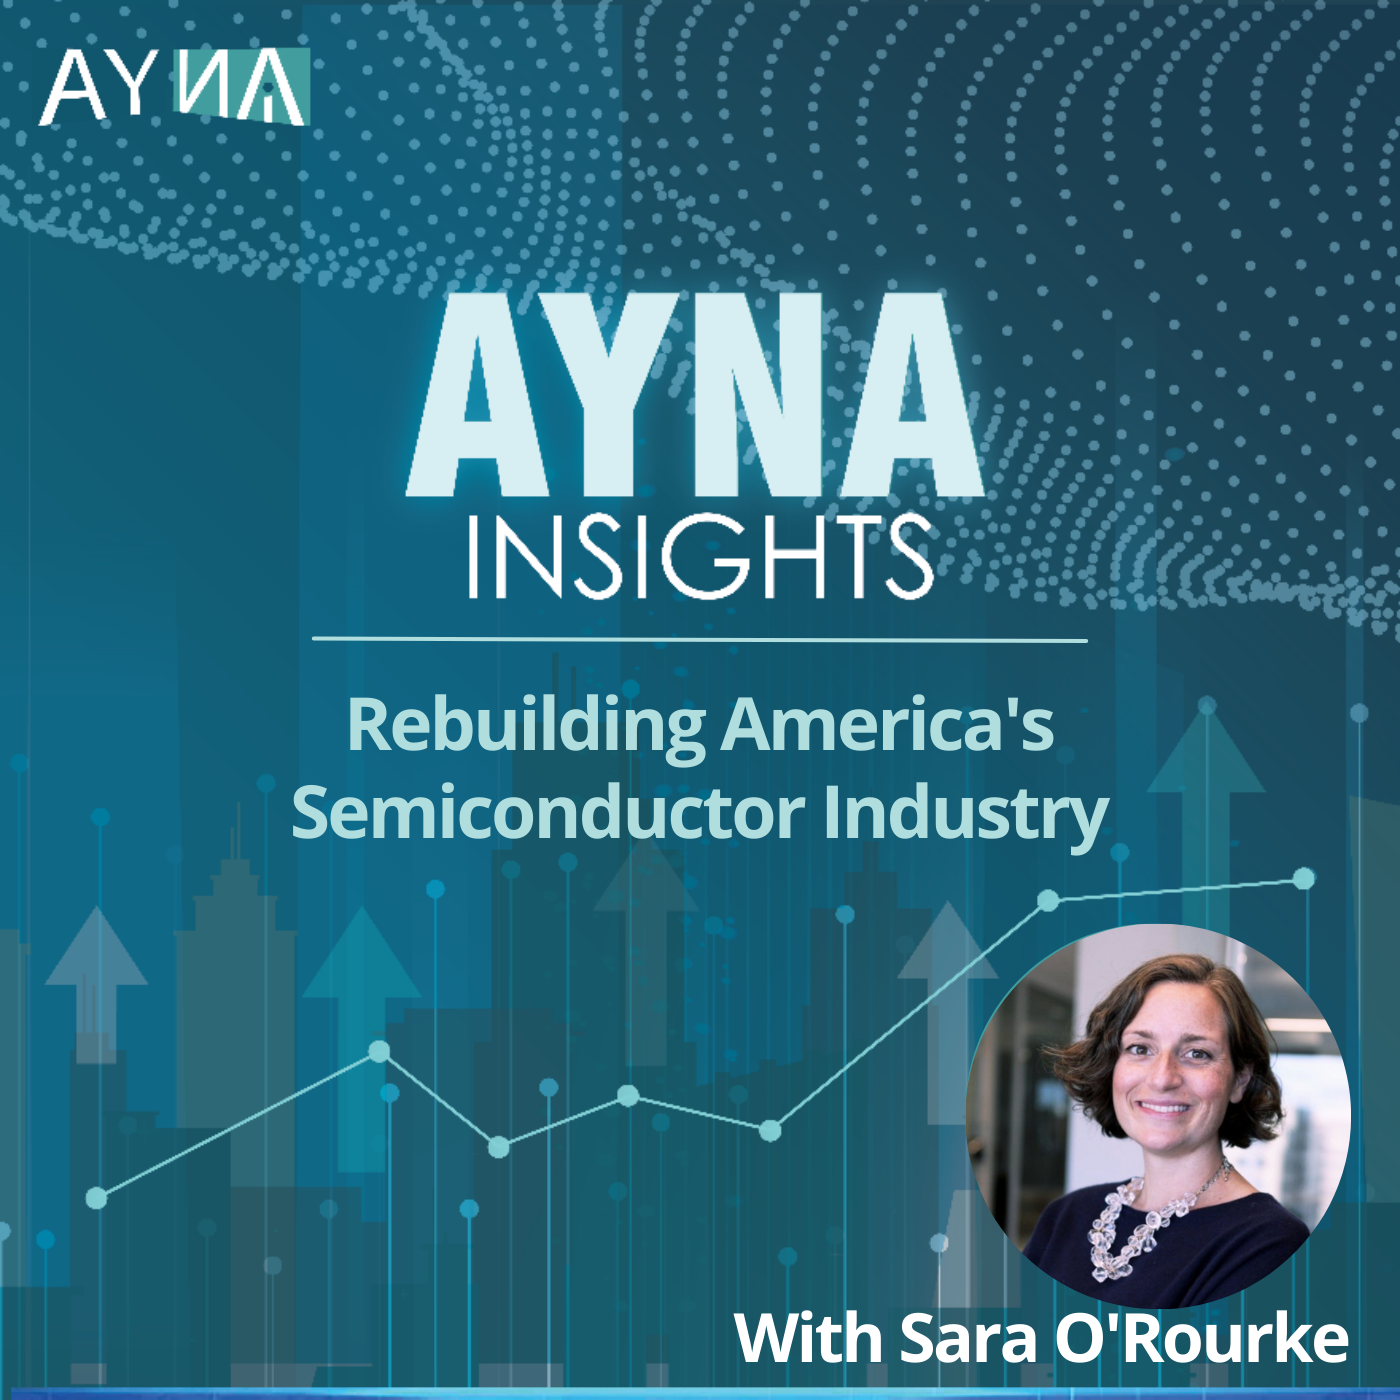 Sara O'Rourke: Rebuilding America's Semiconductor Industry